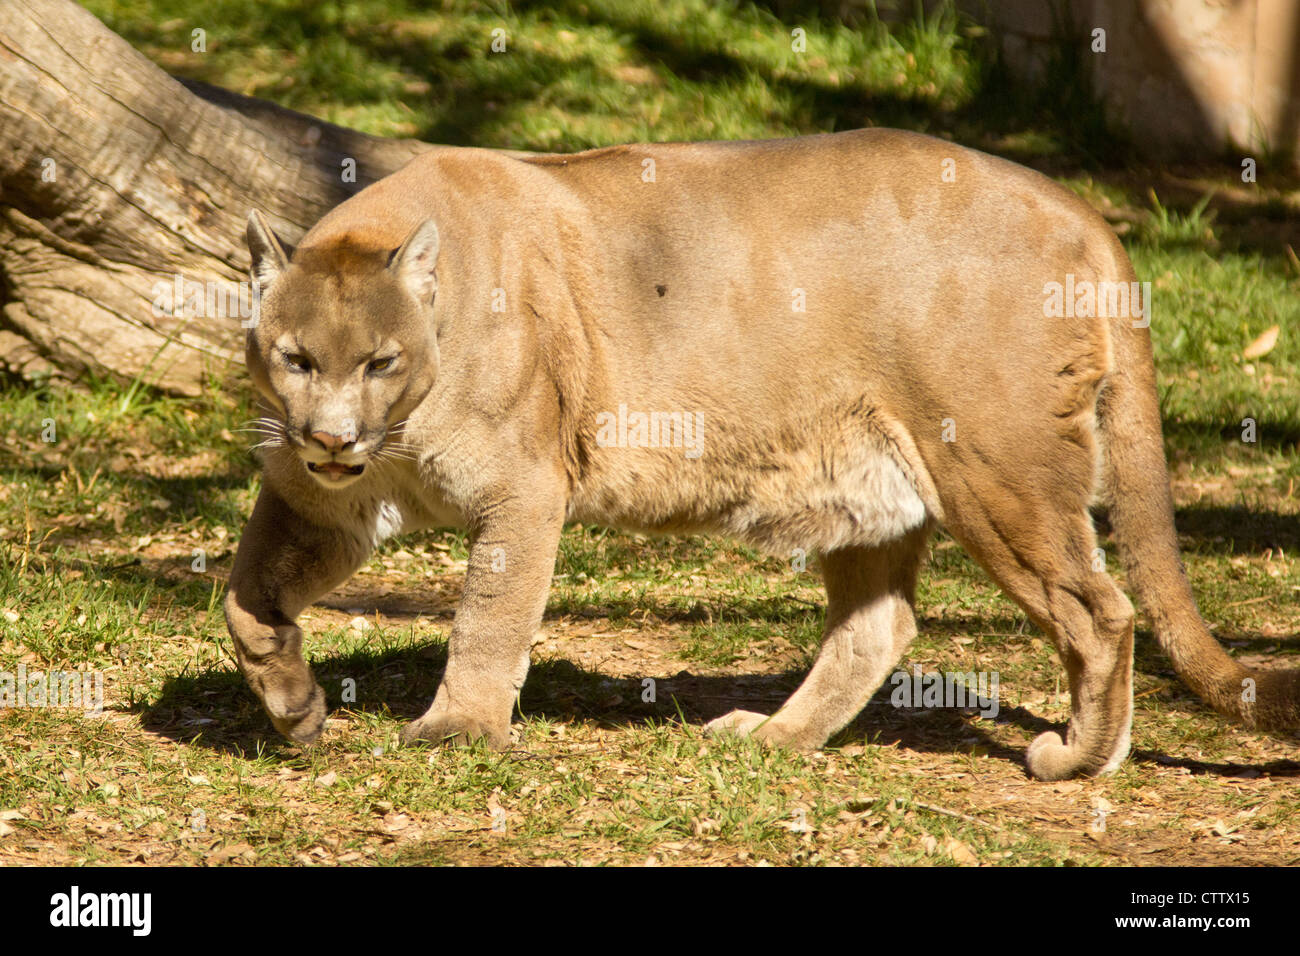 puma or cougar or mountain lion